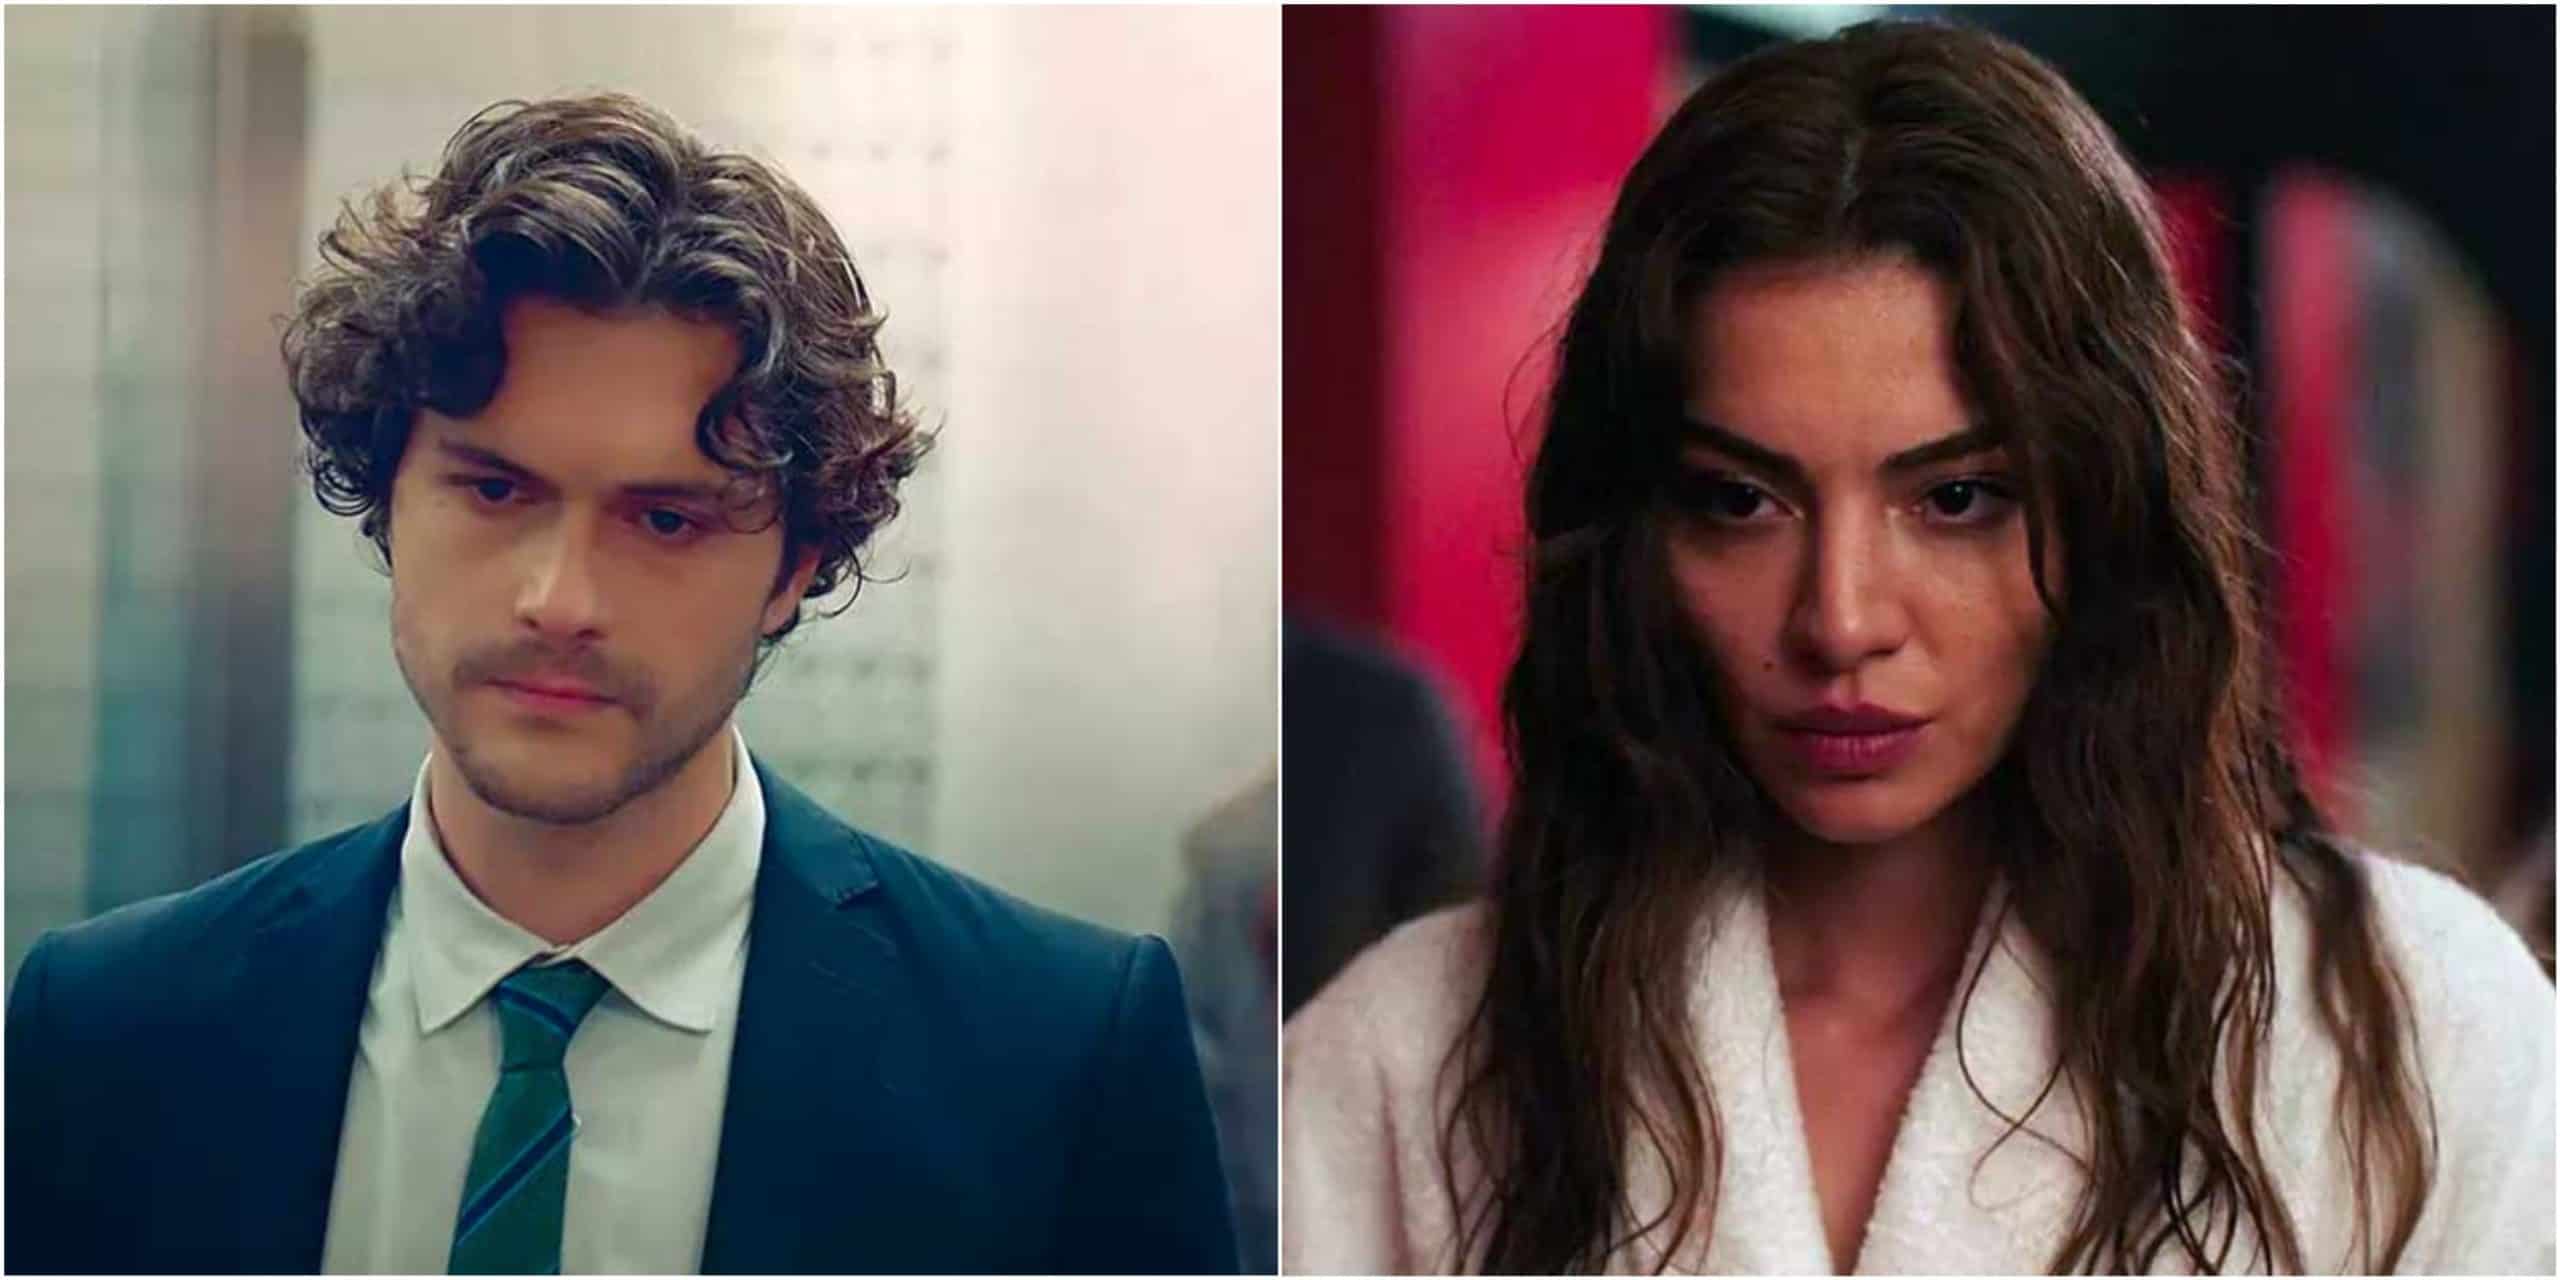 Erkeğe Güven Olmaz (EGO) Serie de comedia romántica turca Episodio 4 Elenco